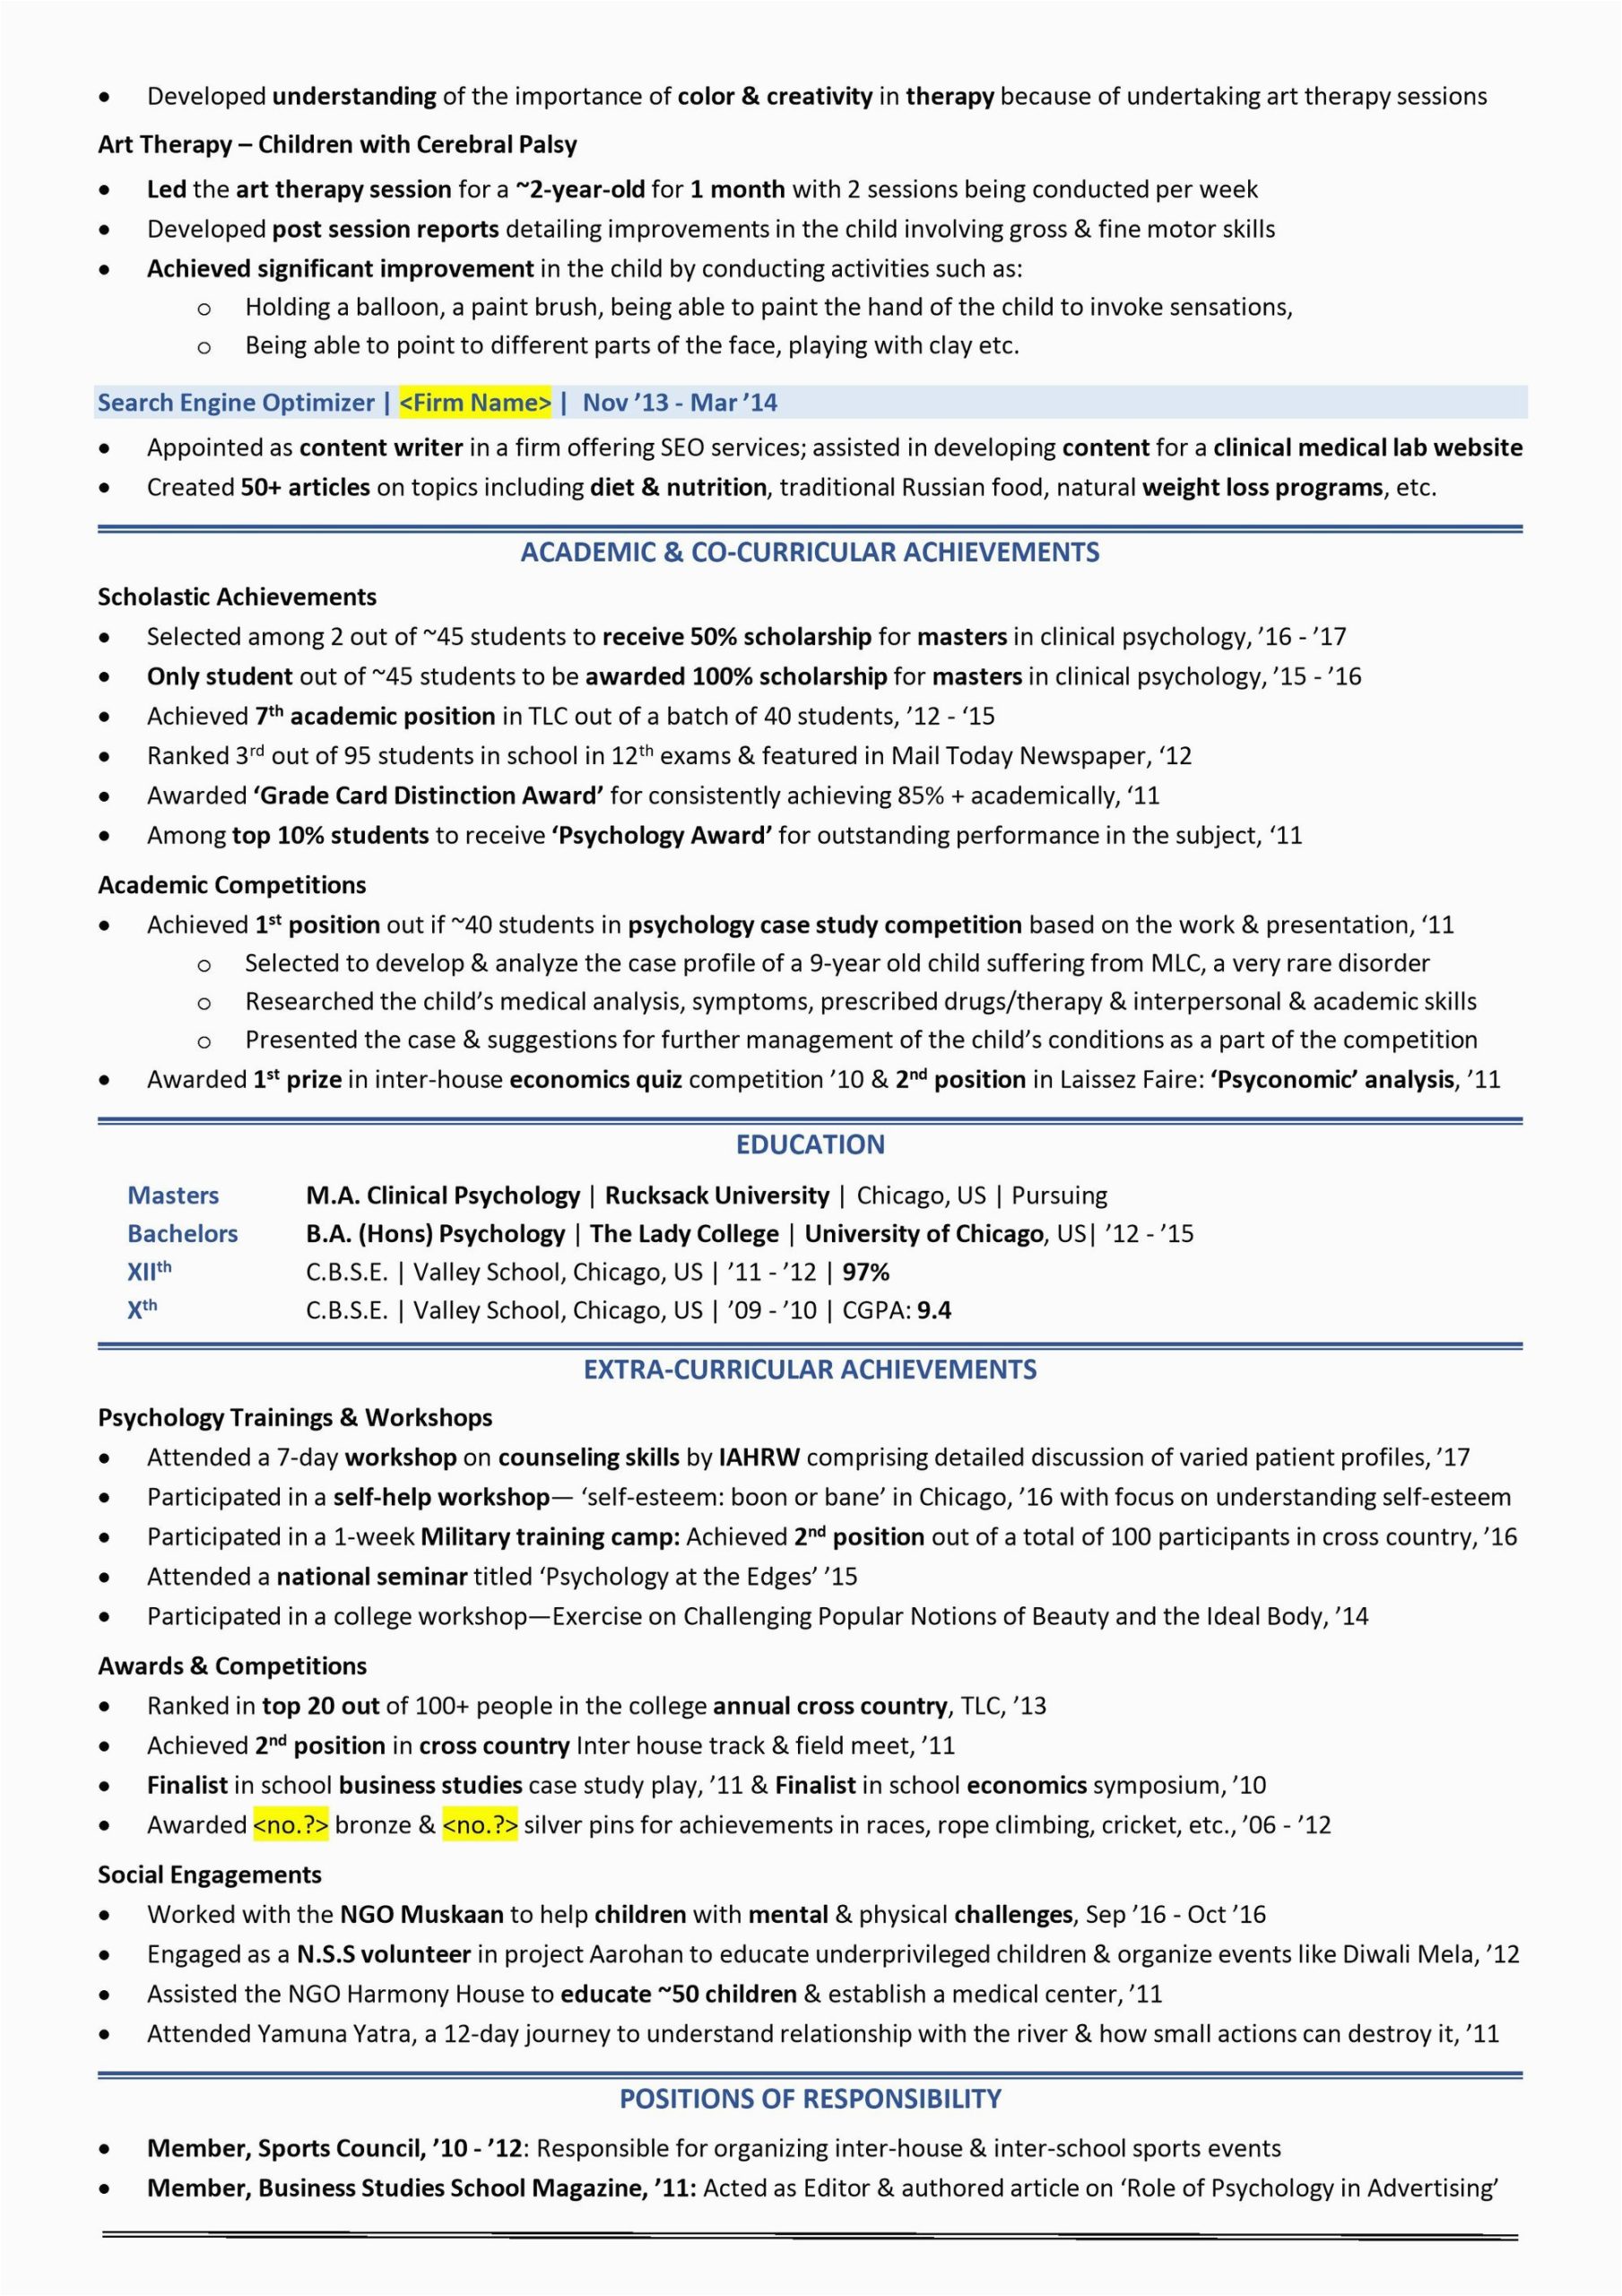 Sample Resume for College Scholarship Application Scholarship Resume [2020 Guide with Scholarship Examples & Samples]